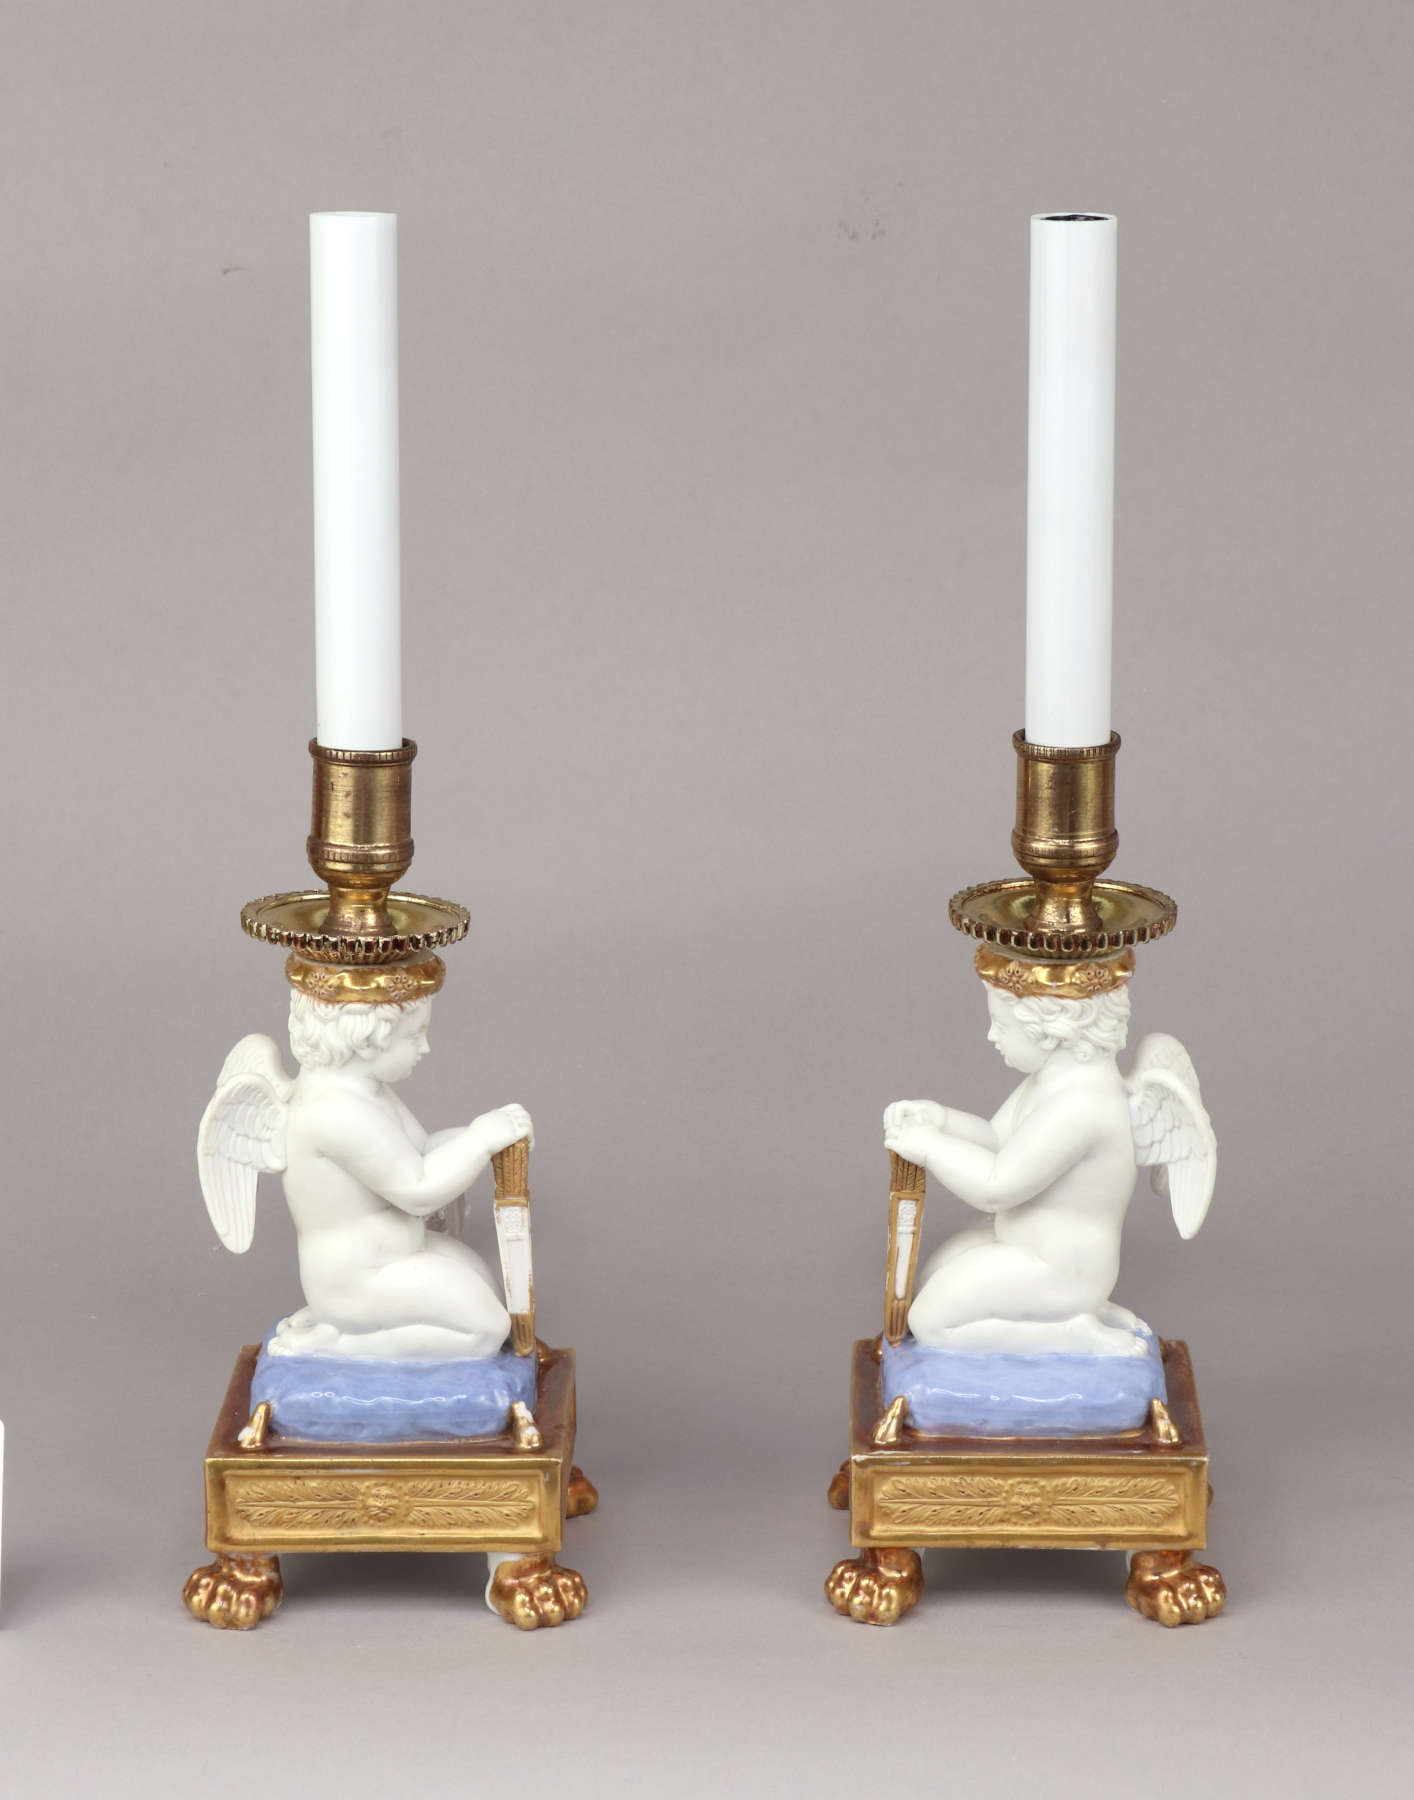 Pair of Paris Porcelain Putti Mounted as Lamps, c. 1810-20